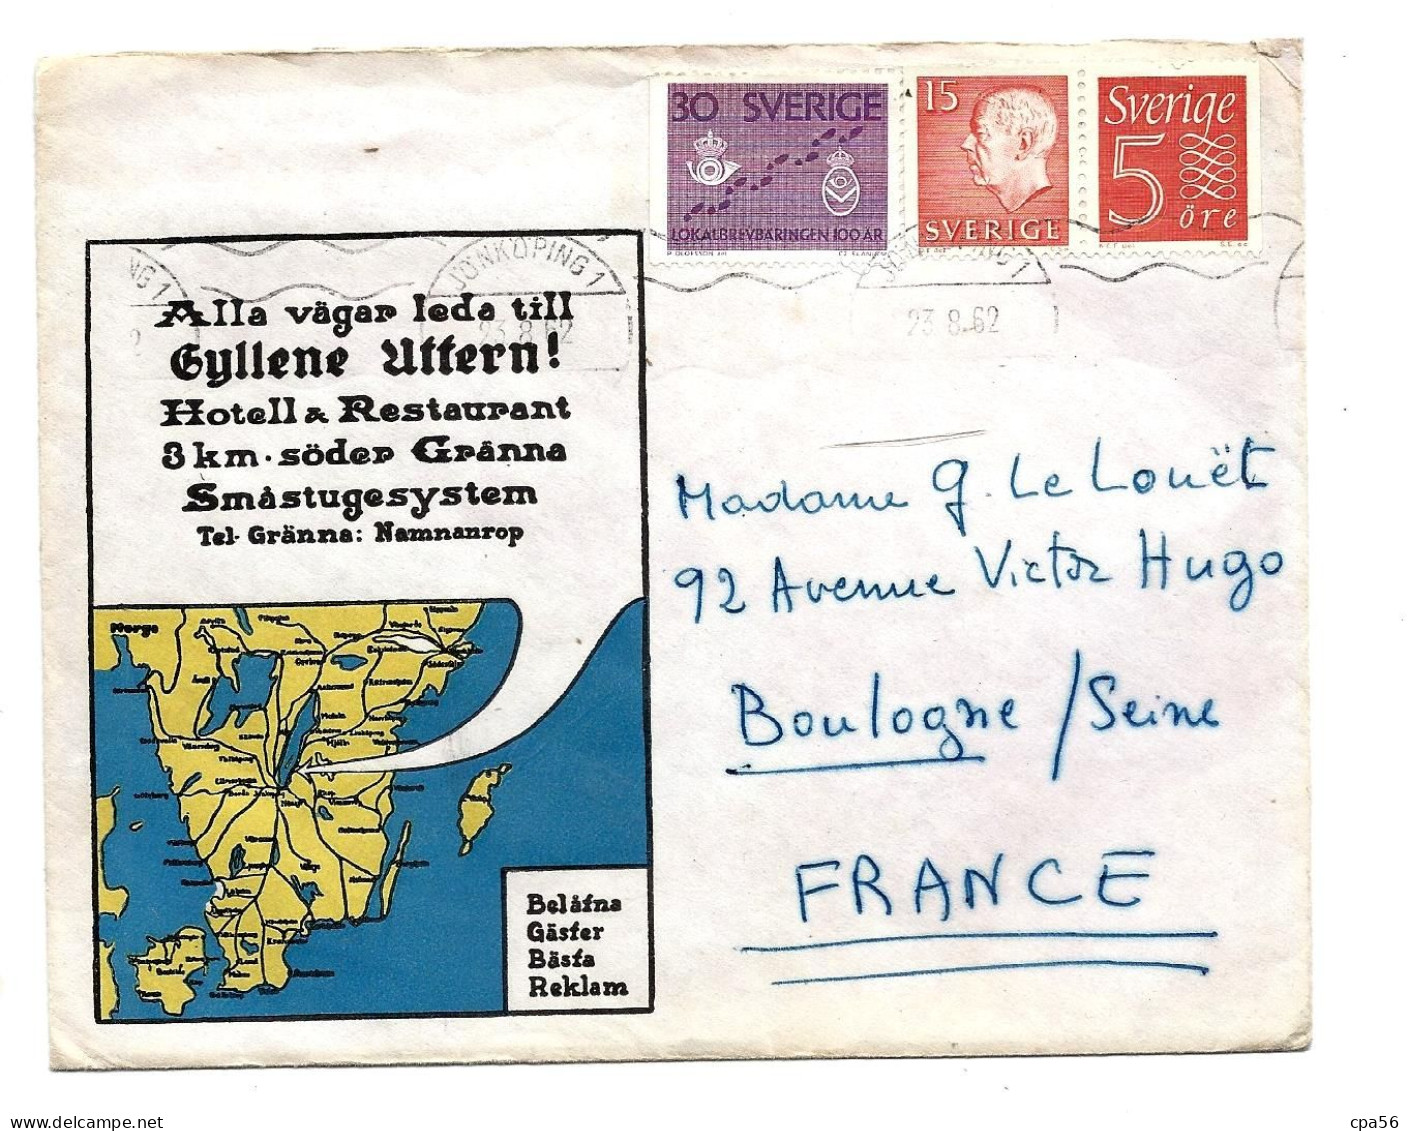 SVERIGE - SUEDE - SWEDEN - Letter 1962 - 3 Stamps - Hotell Restaurant GYLLENE UTTERN - Covers & Documents